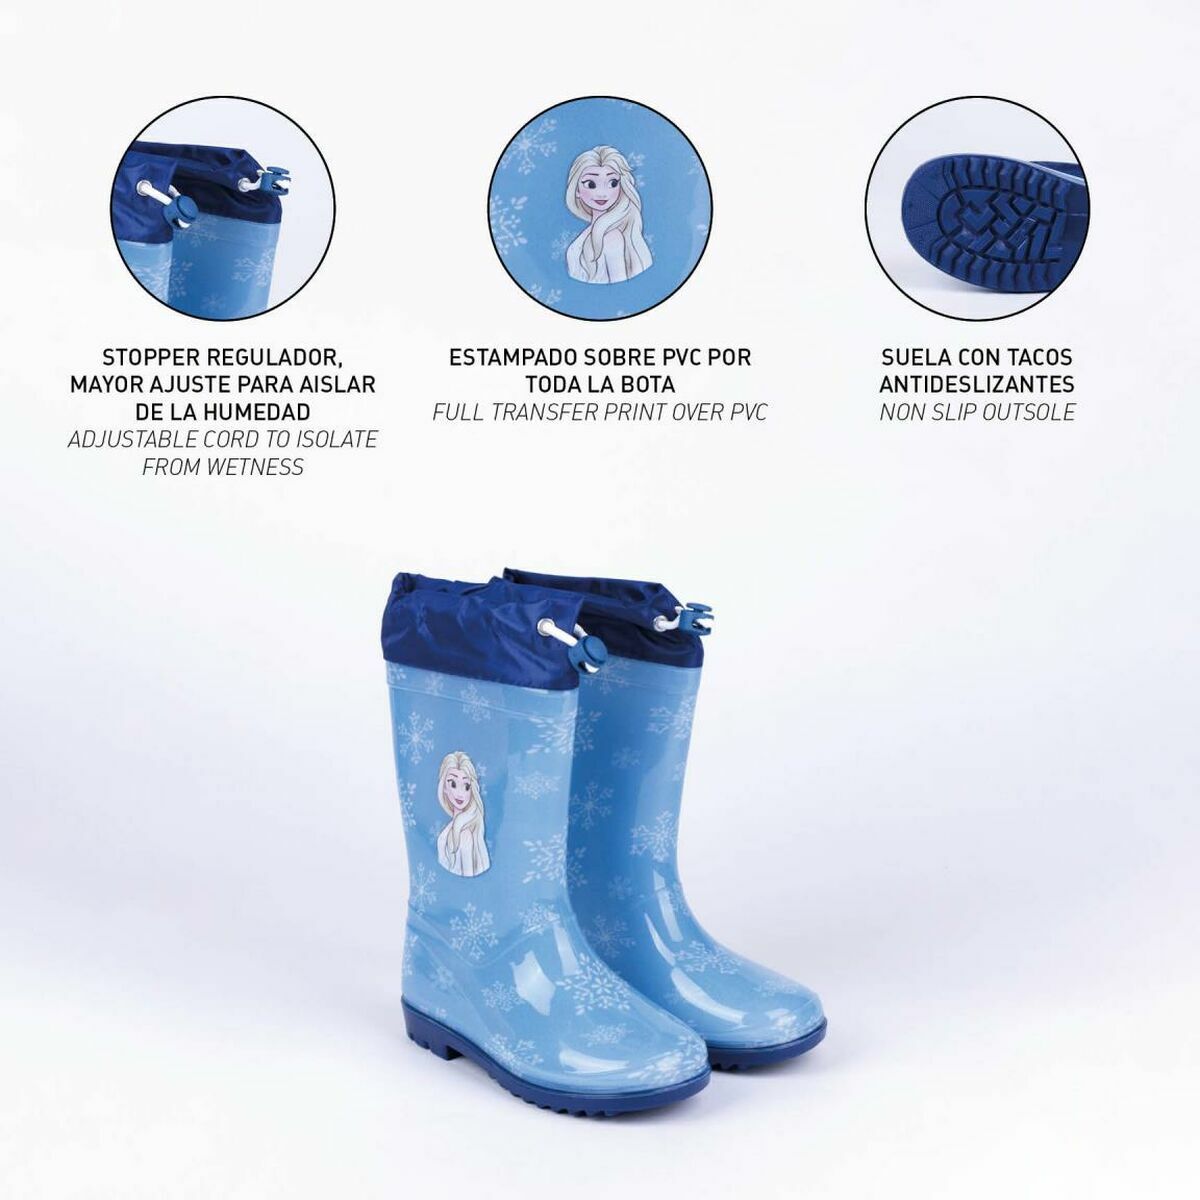 Children's Water Boots Frozen Blue